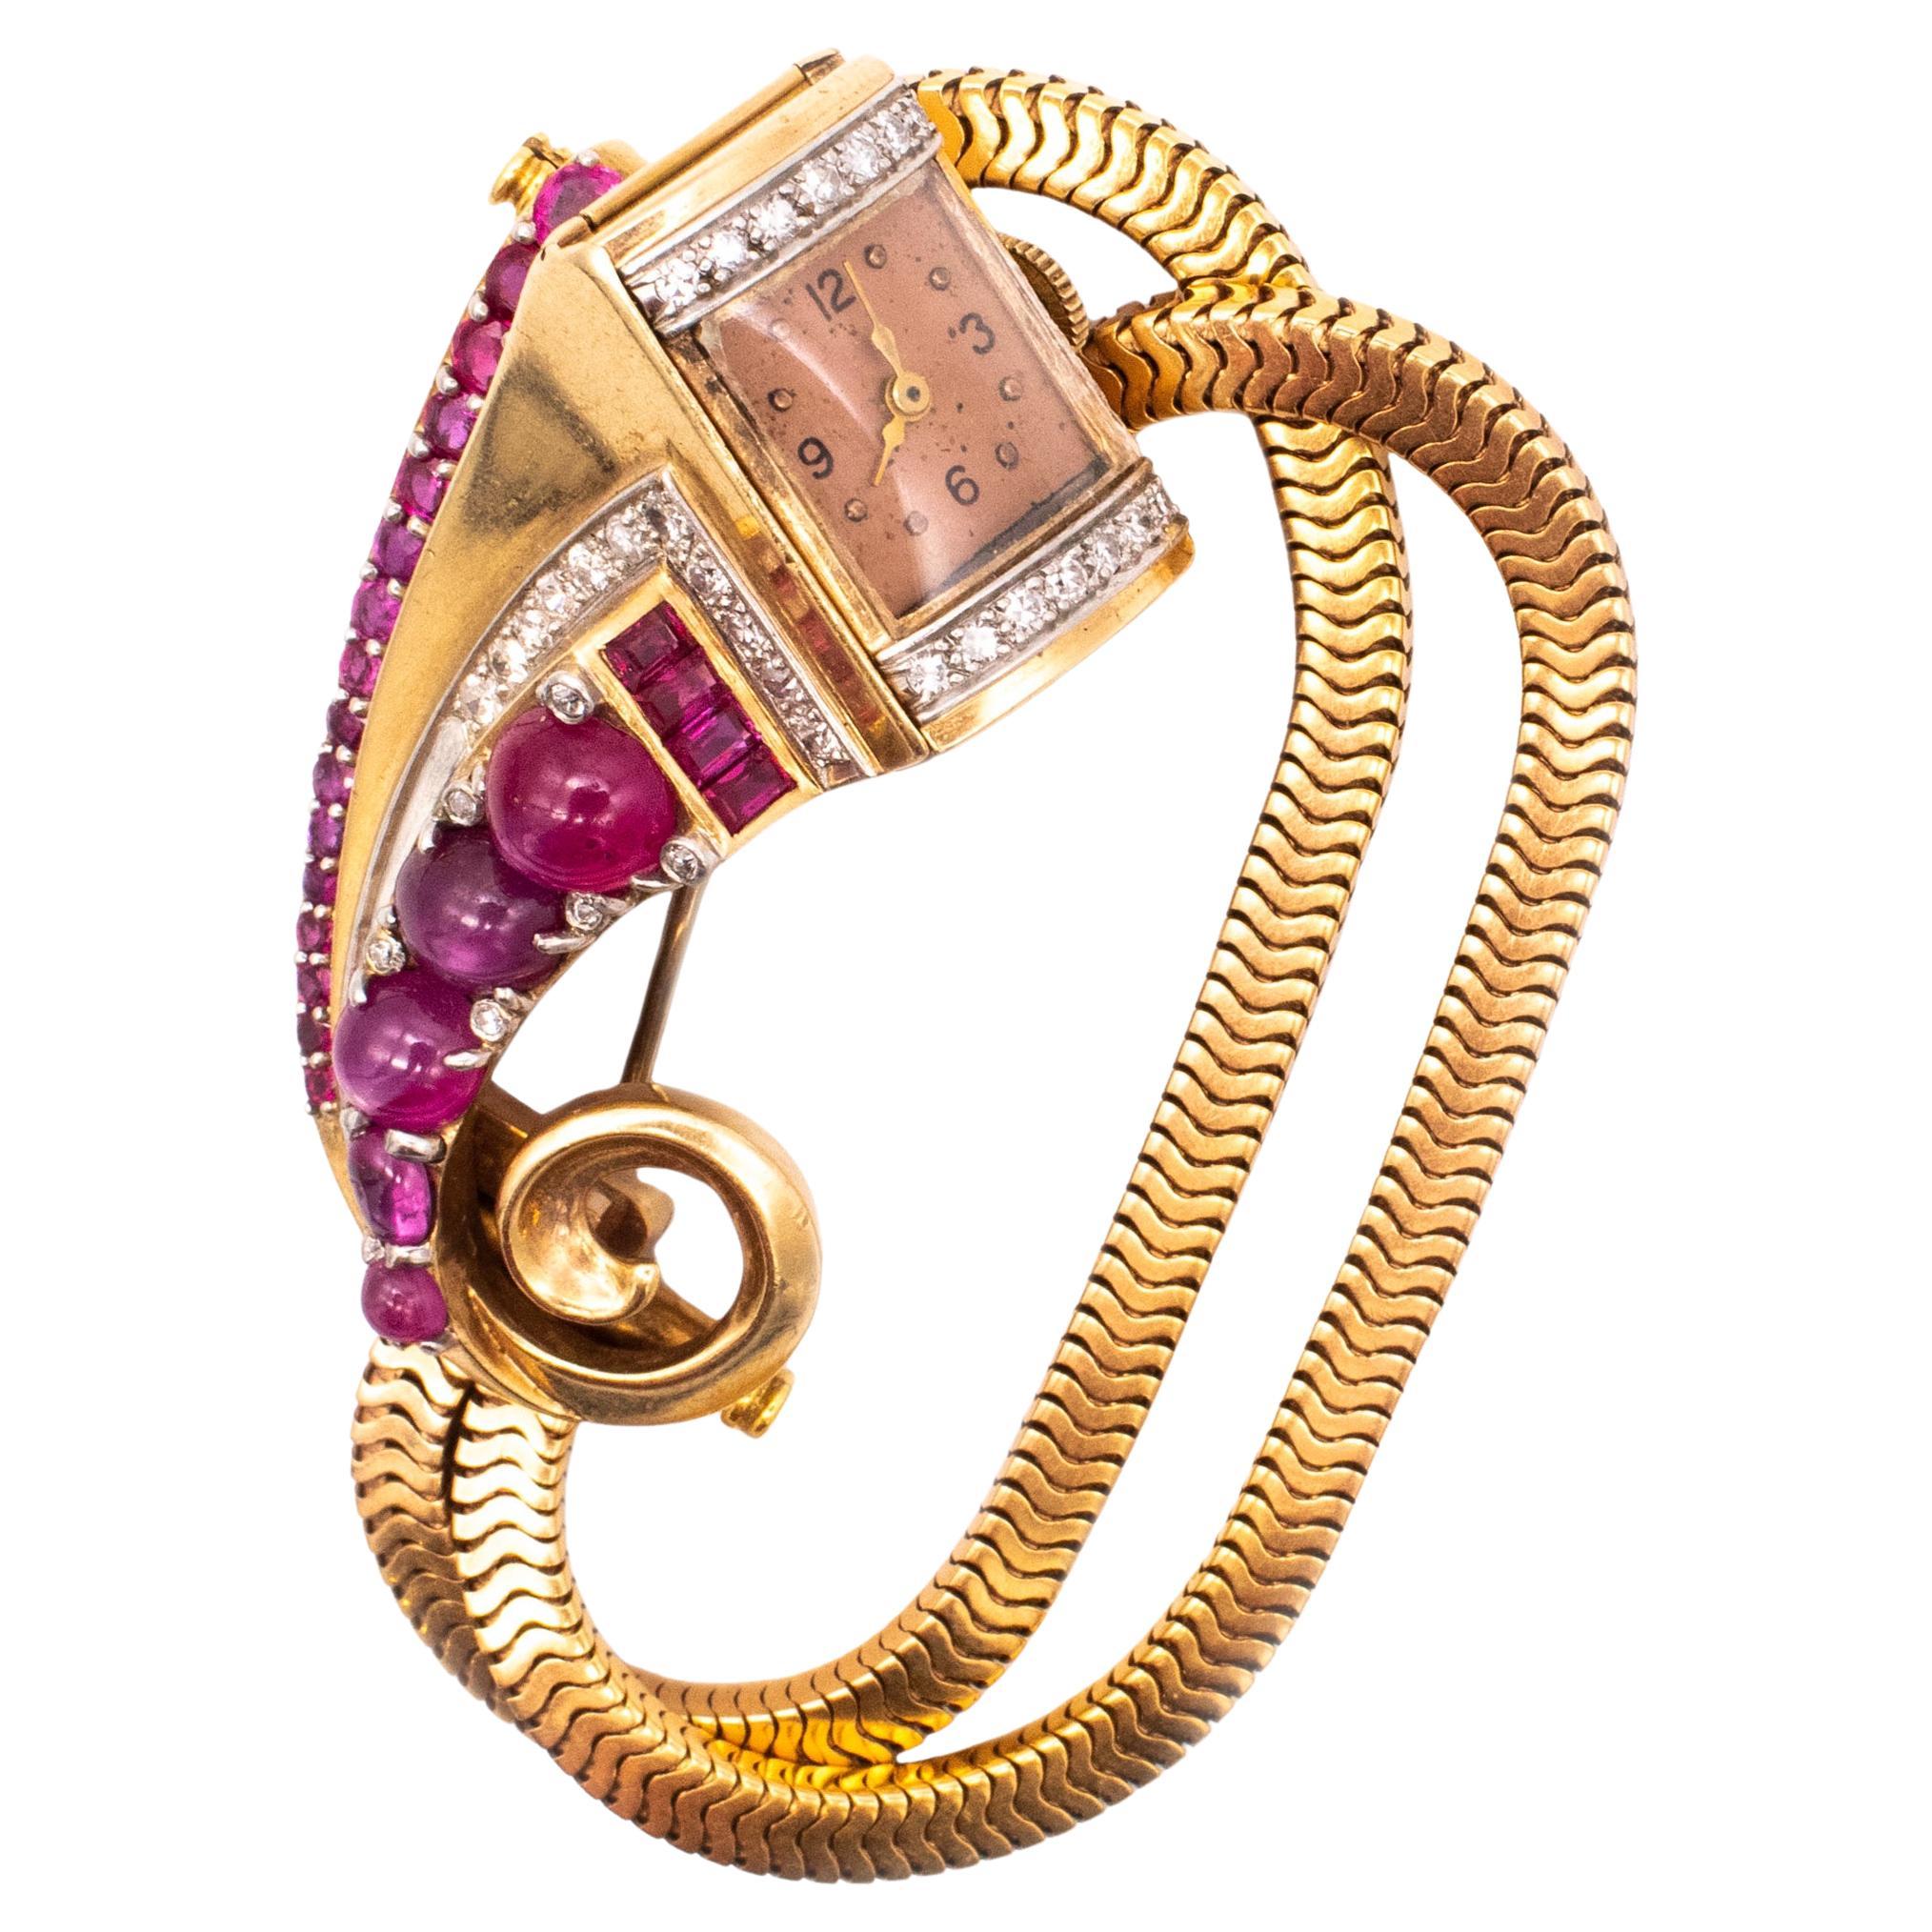 Art Deco 1940 Brooch Wristwatch 18Kt Gold Gia Certified 9.87 Ctw Diamonds Rubies For Sale